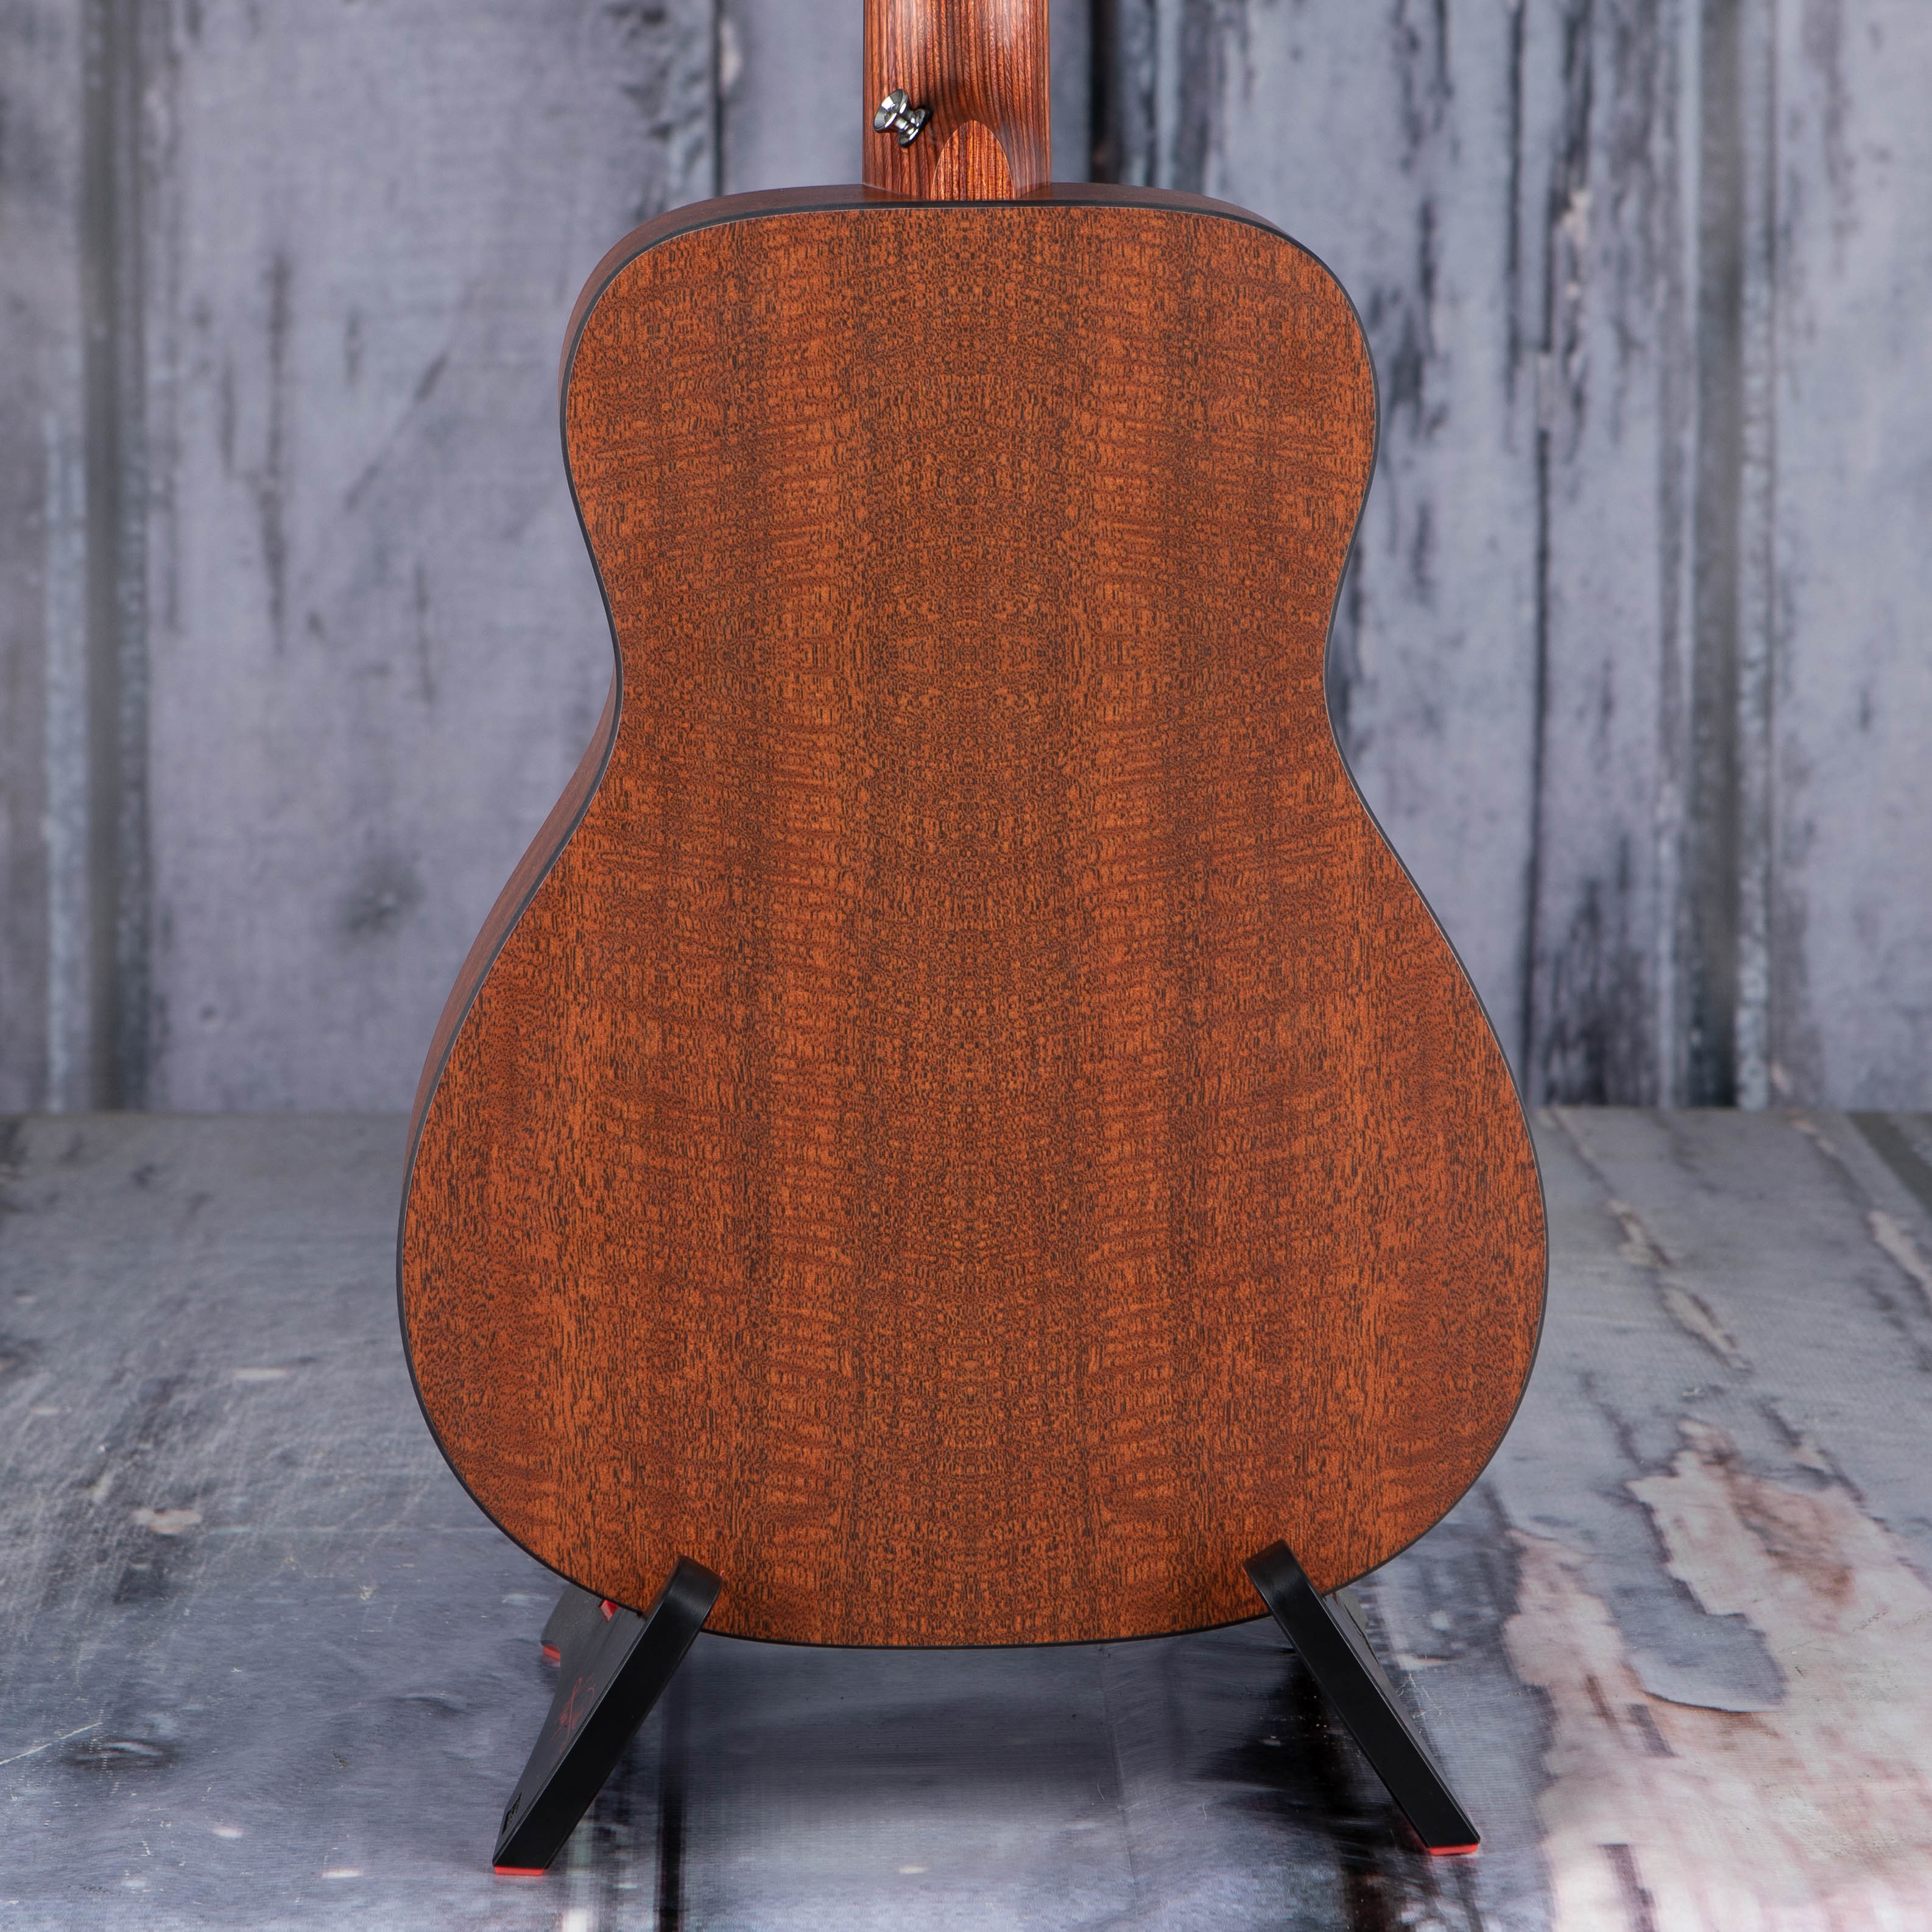 Martin LX1 Little Martin Acoustic Guitar, Natural, back closeup